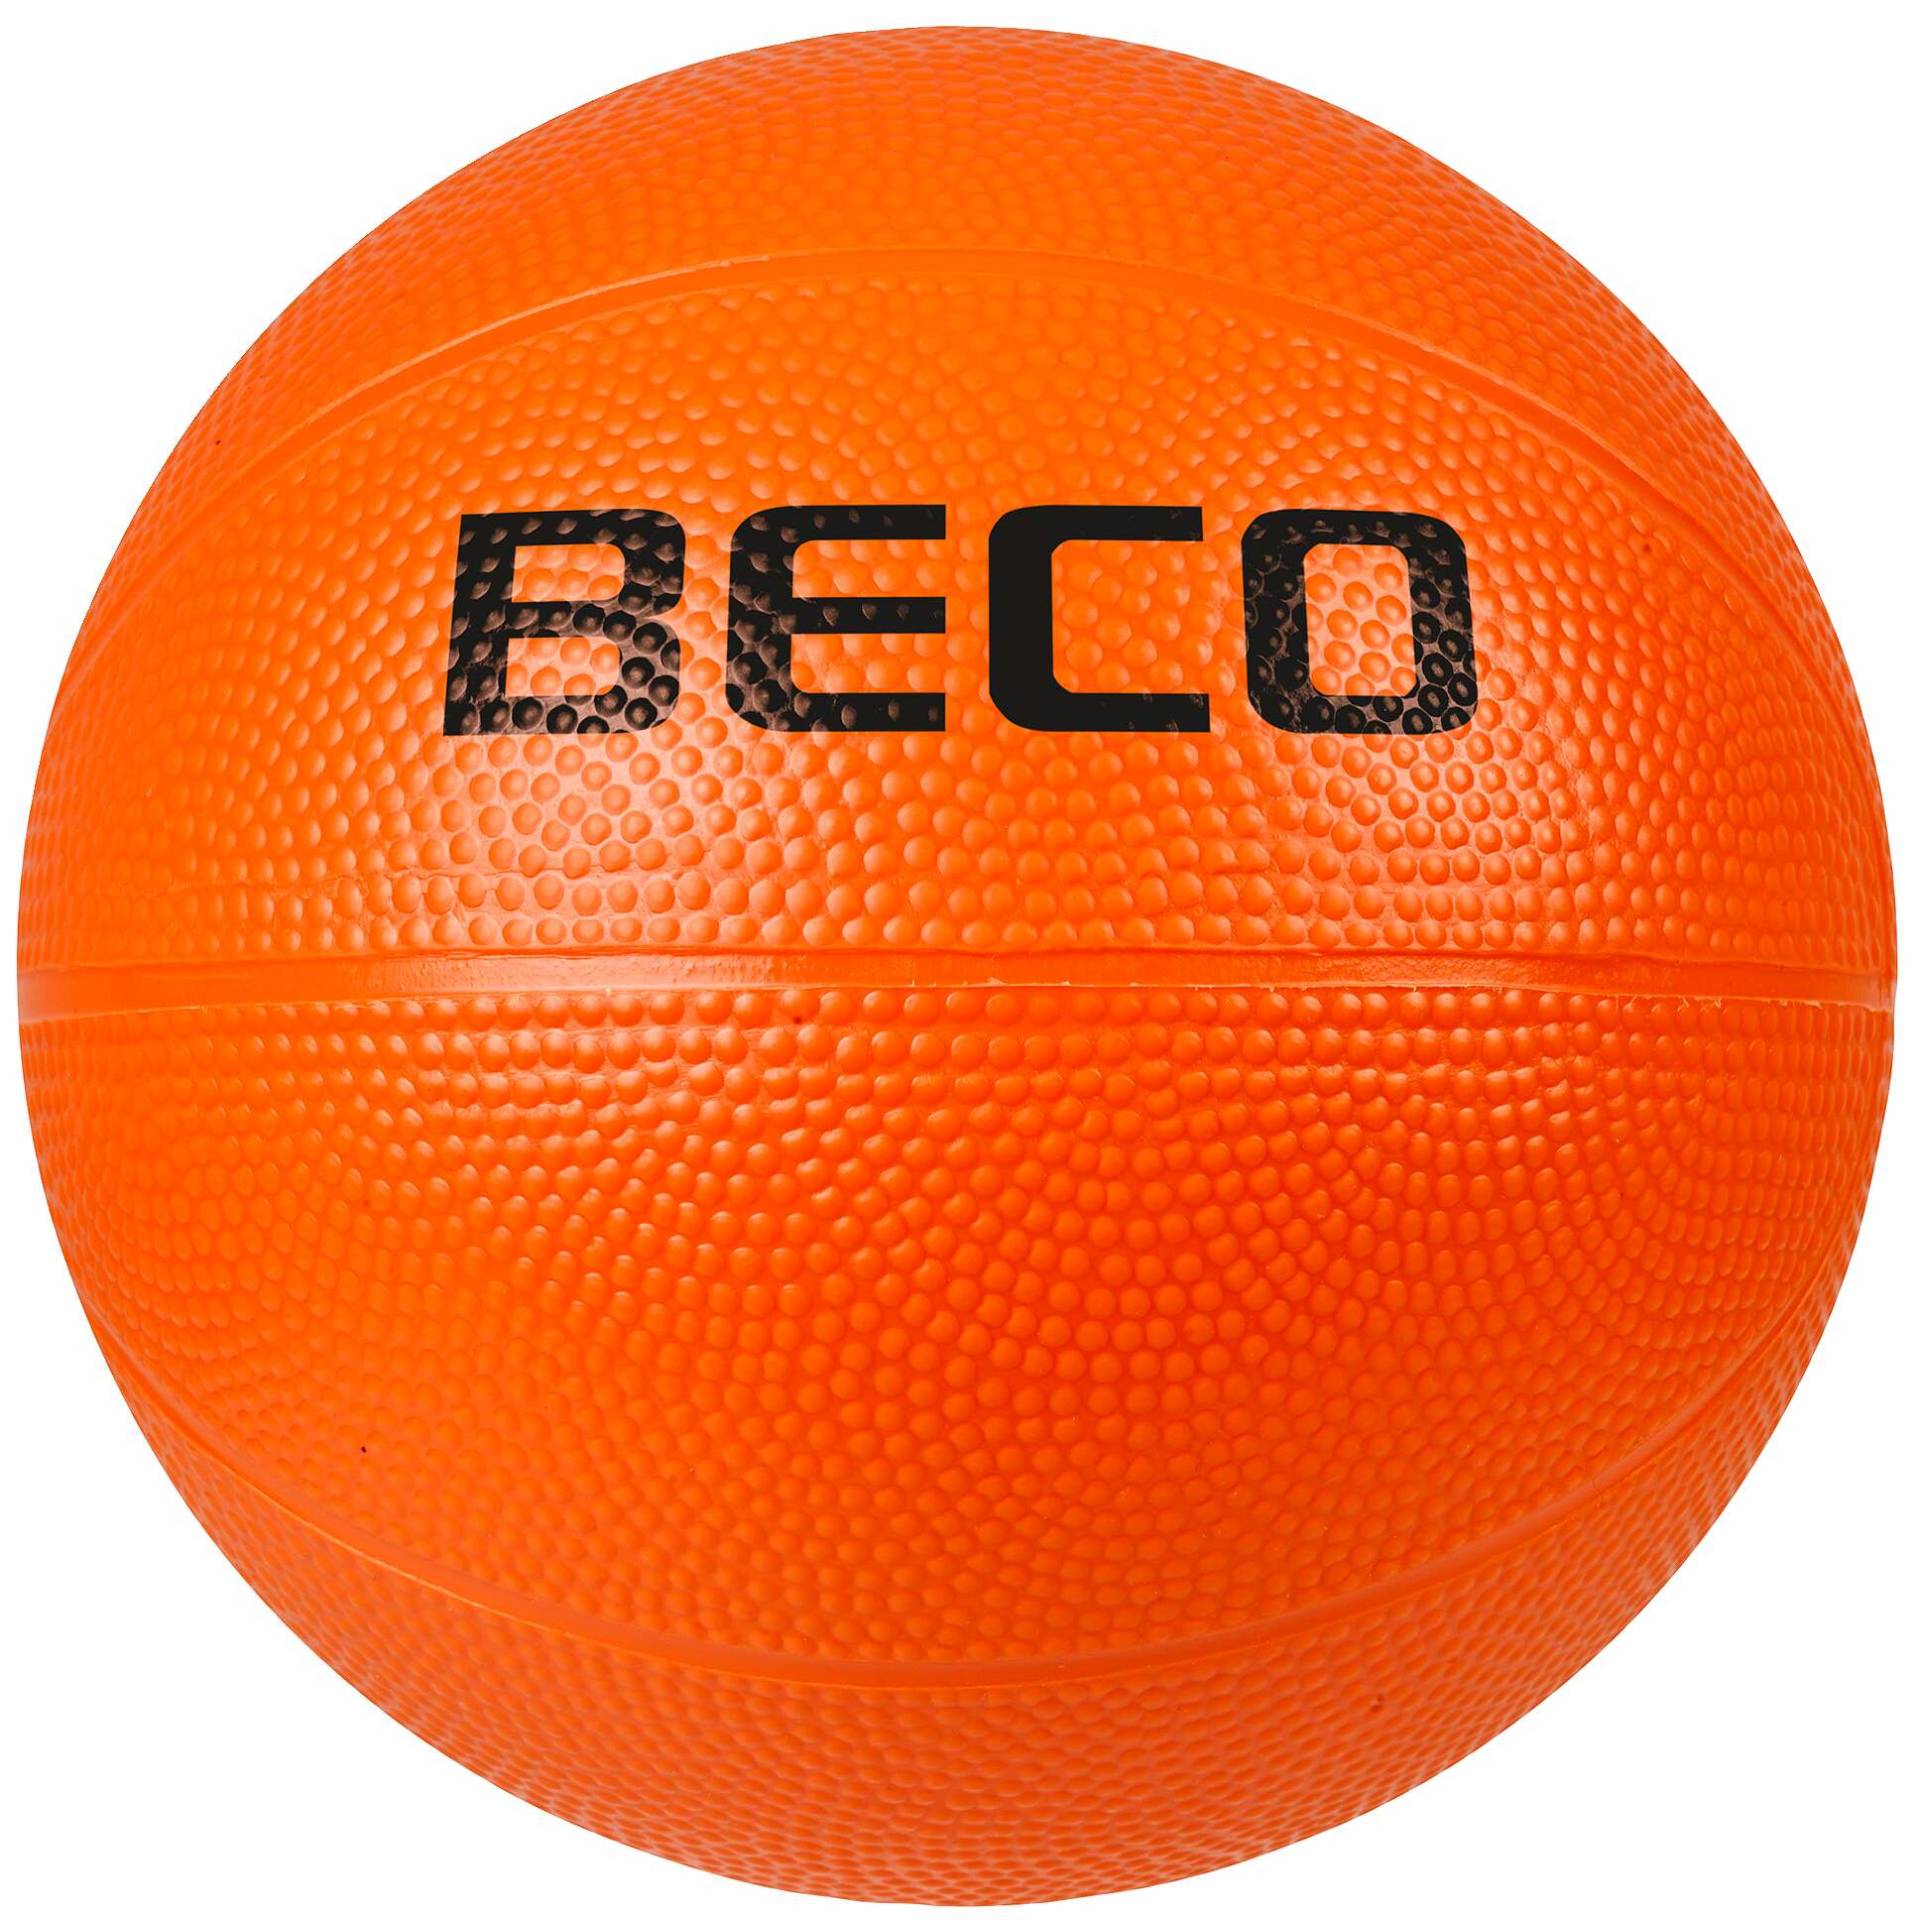 Beco Aqua-Fitnessball von Beco